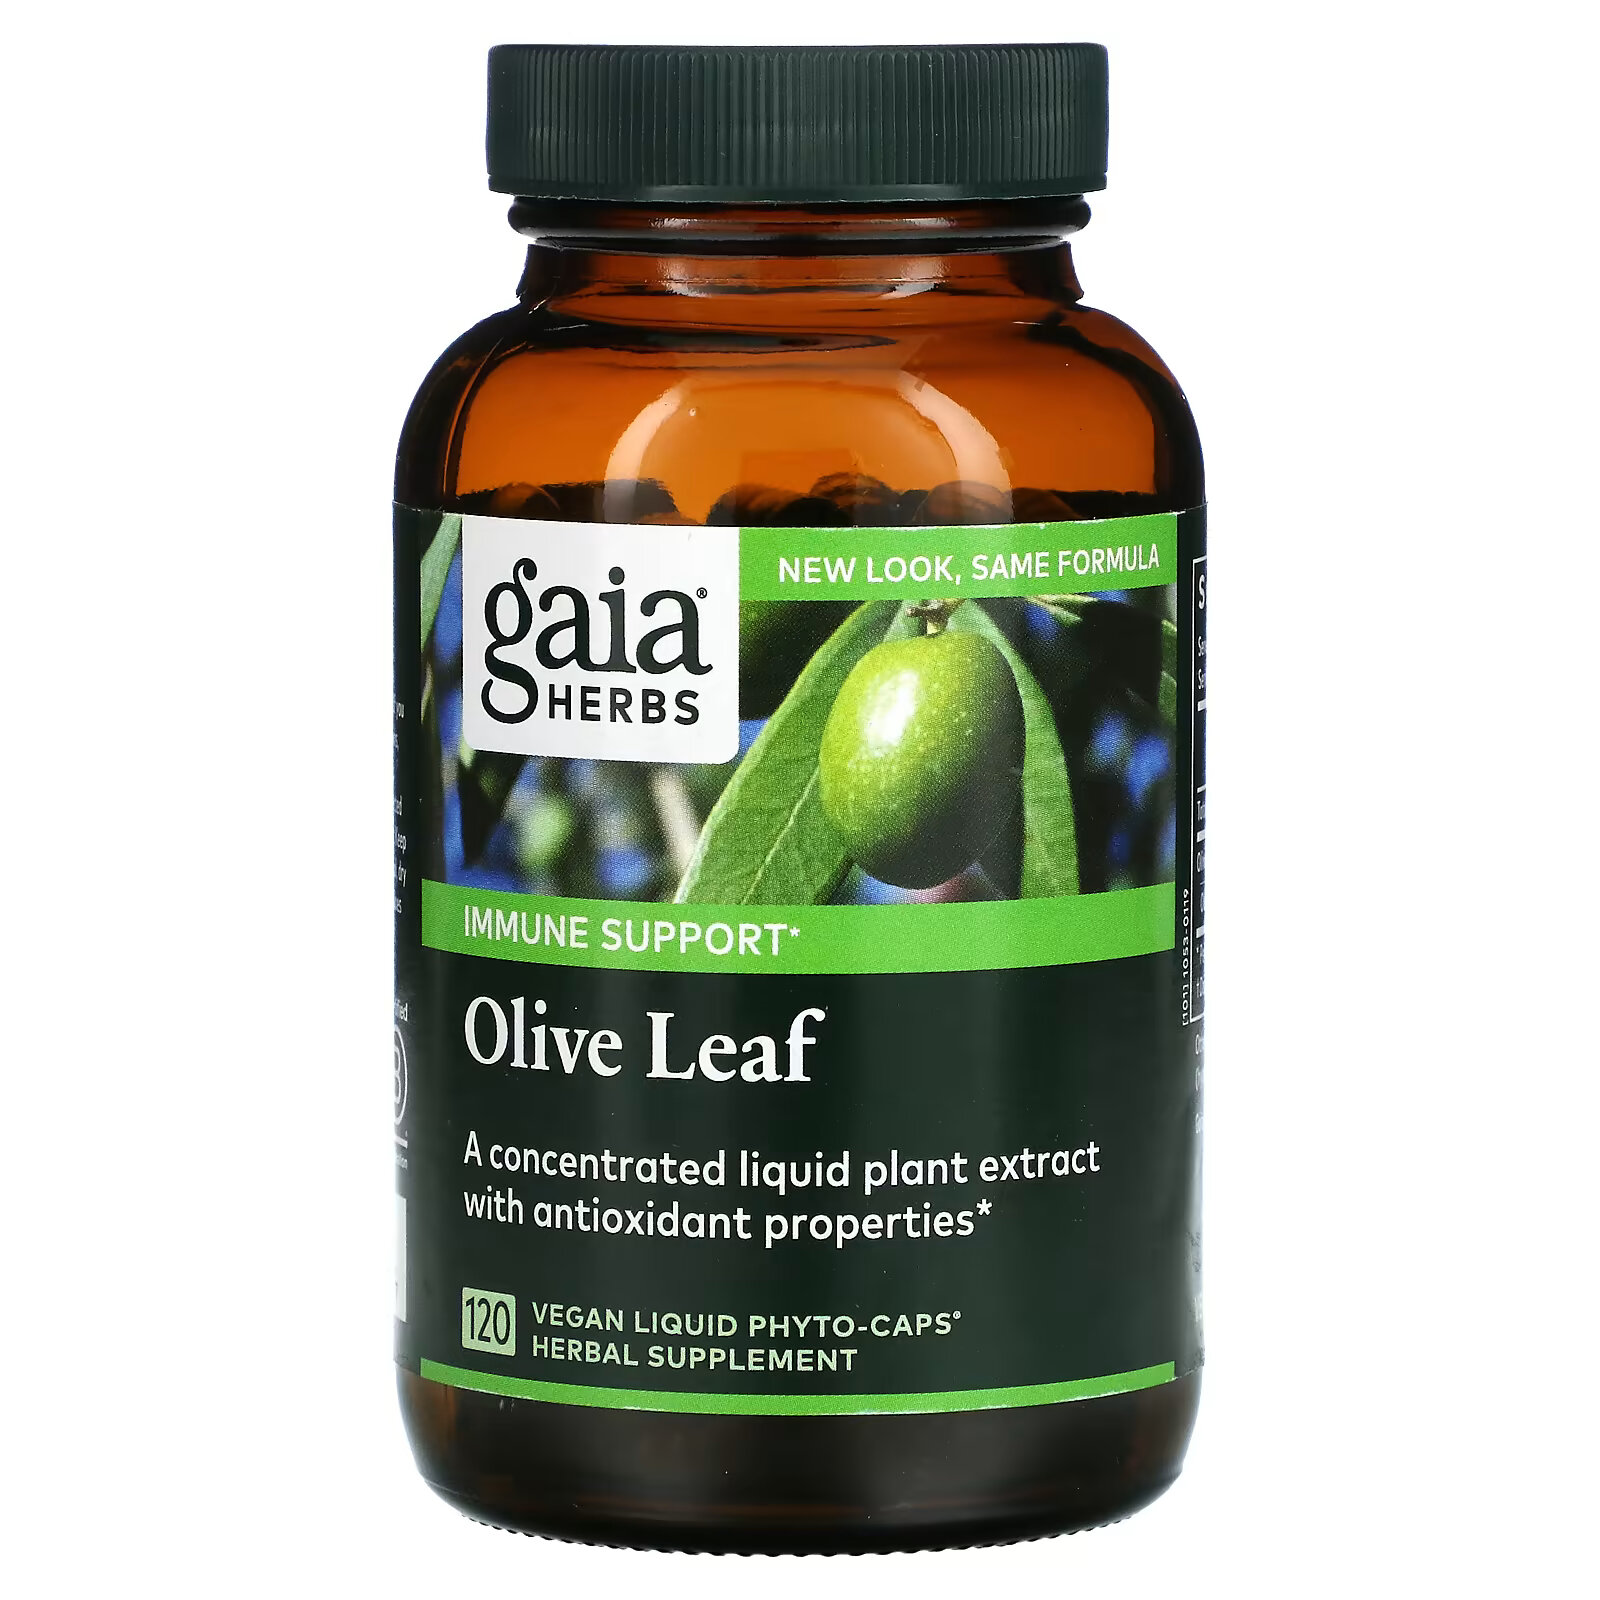 Gaia Herbs, Лист оливы, 120 веганских фито-капсул с жидкостью gaia herbs лист базилика священного 120 веганских капсул